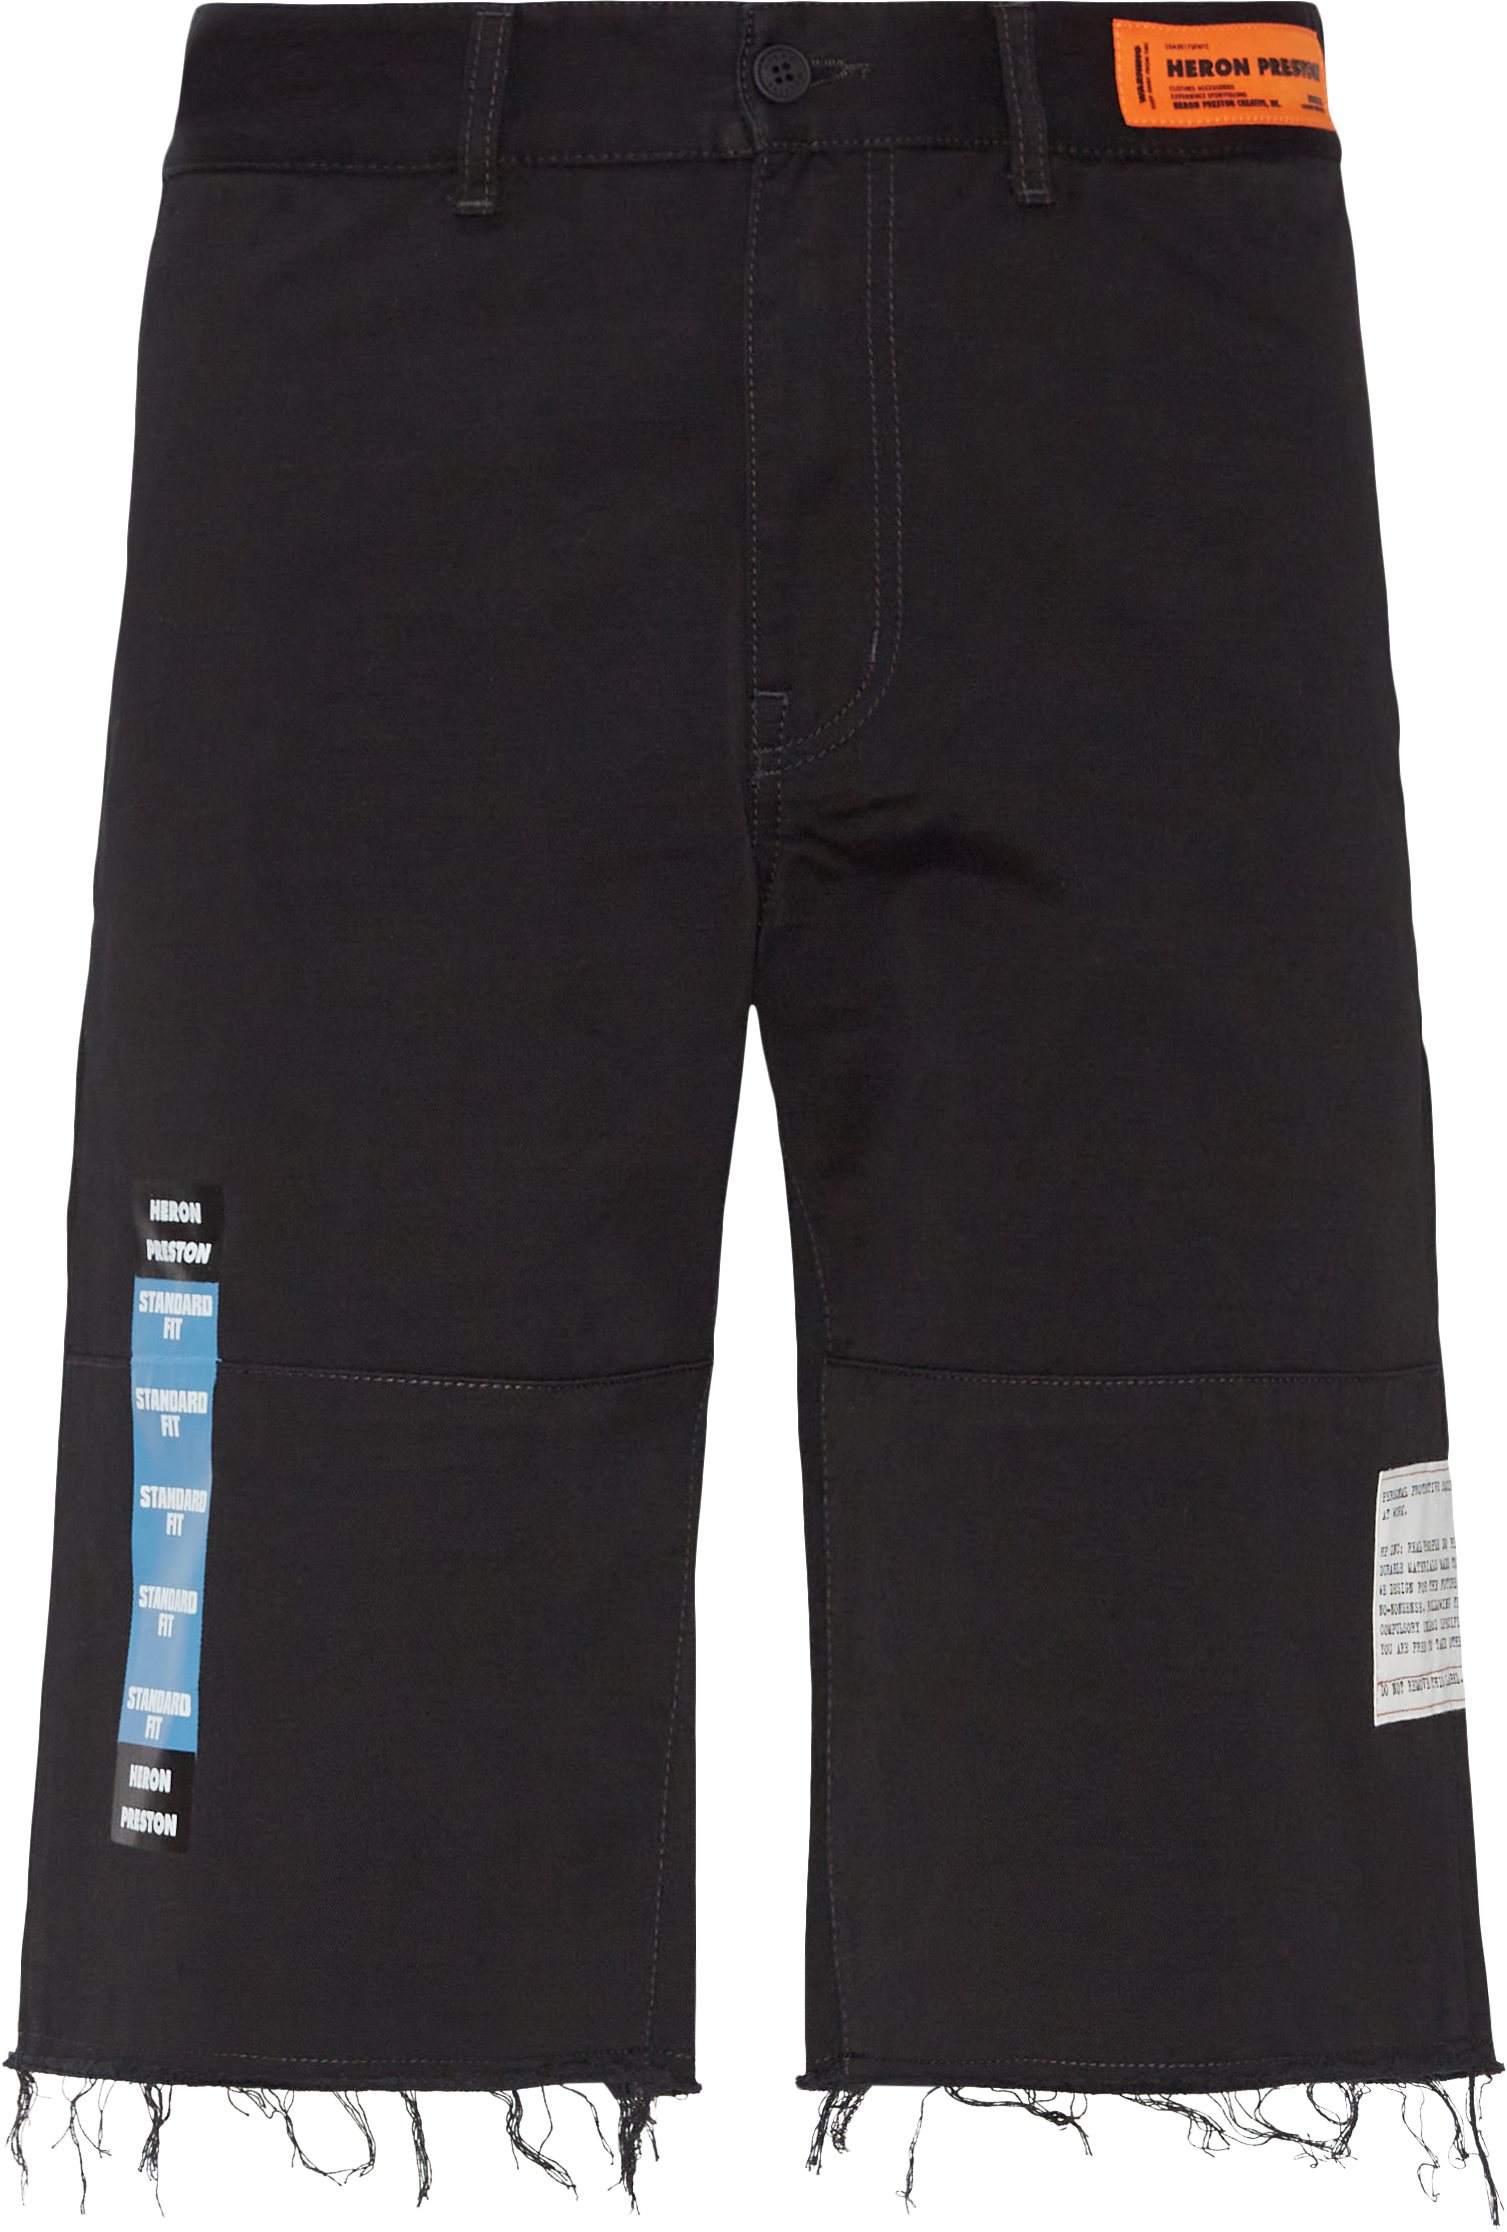 Shorts - Comfort fit - Black